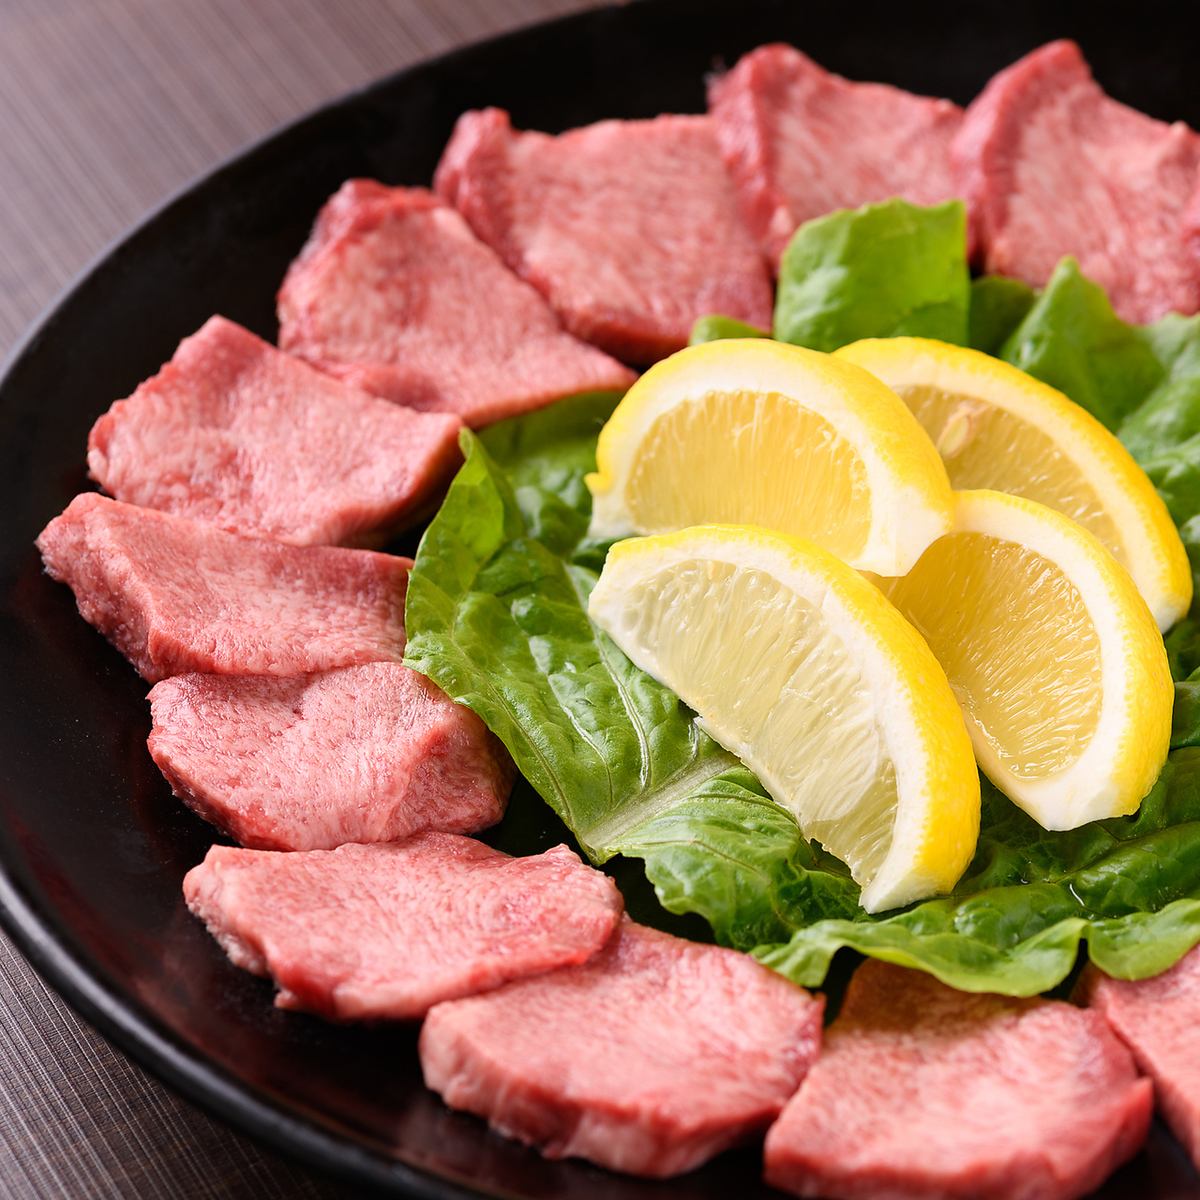 Please enjoy high-quality meat★